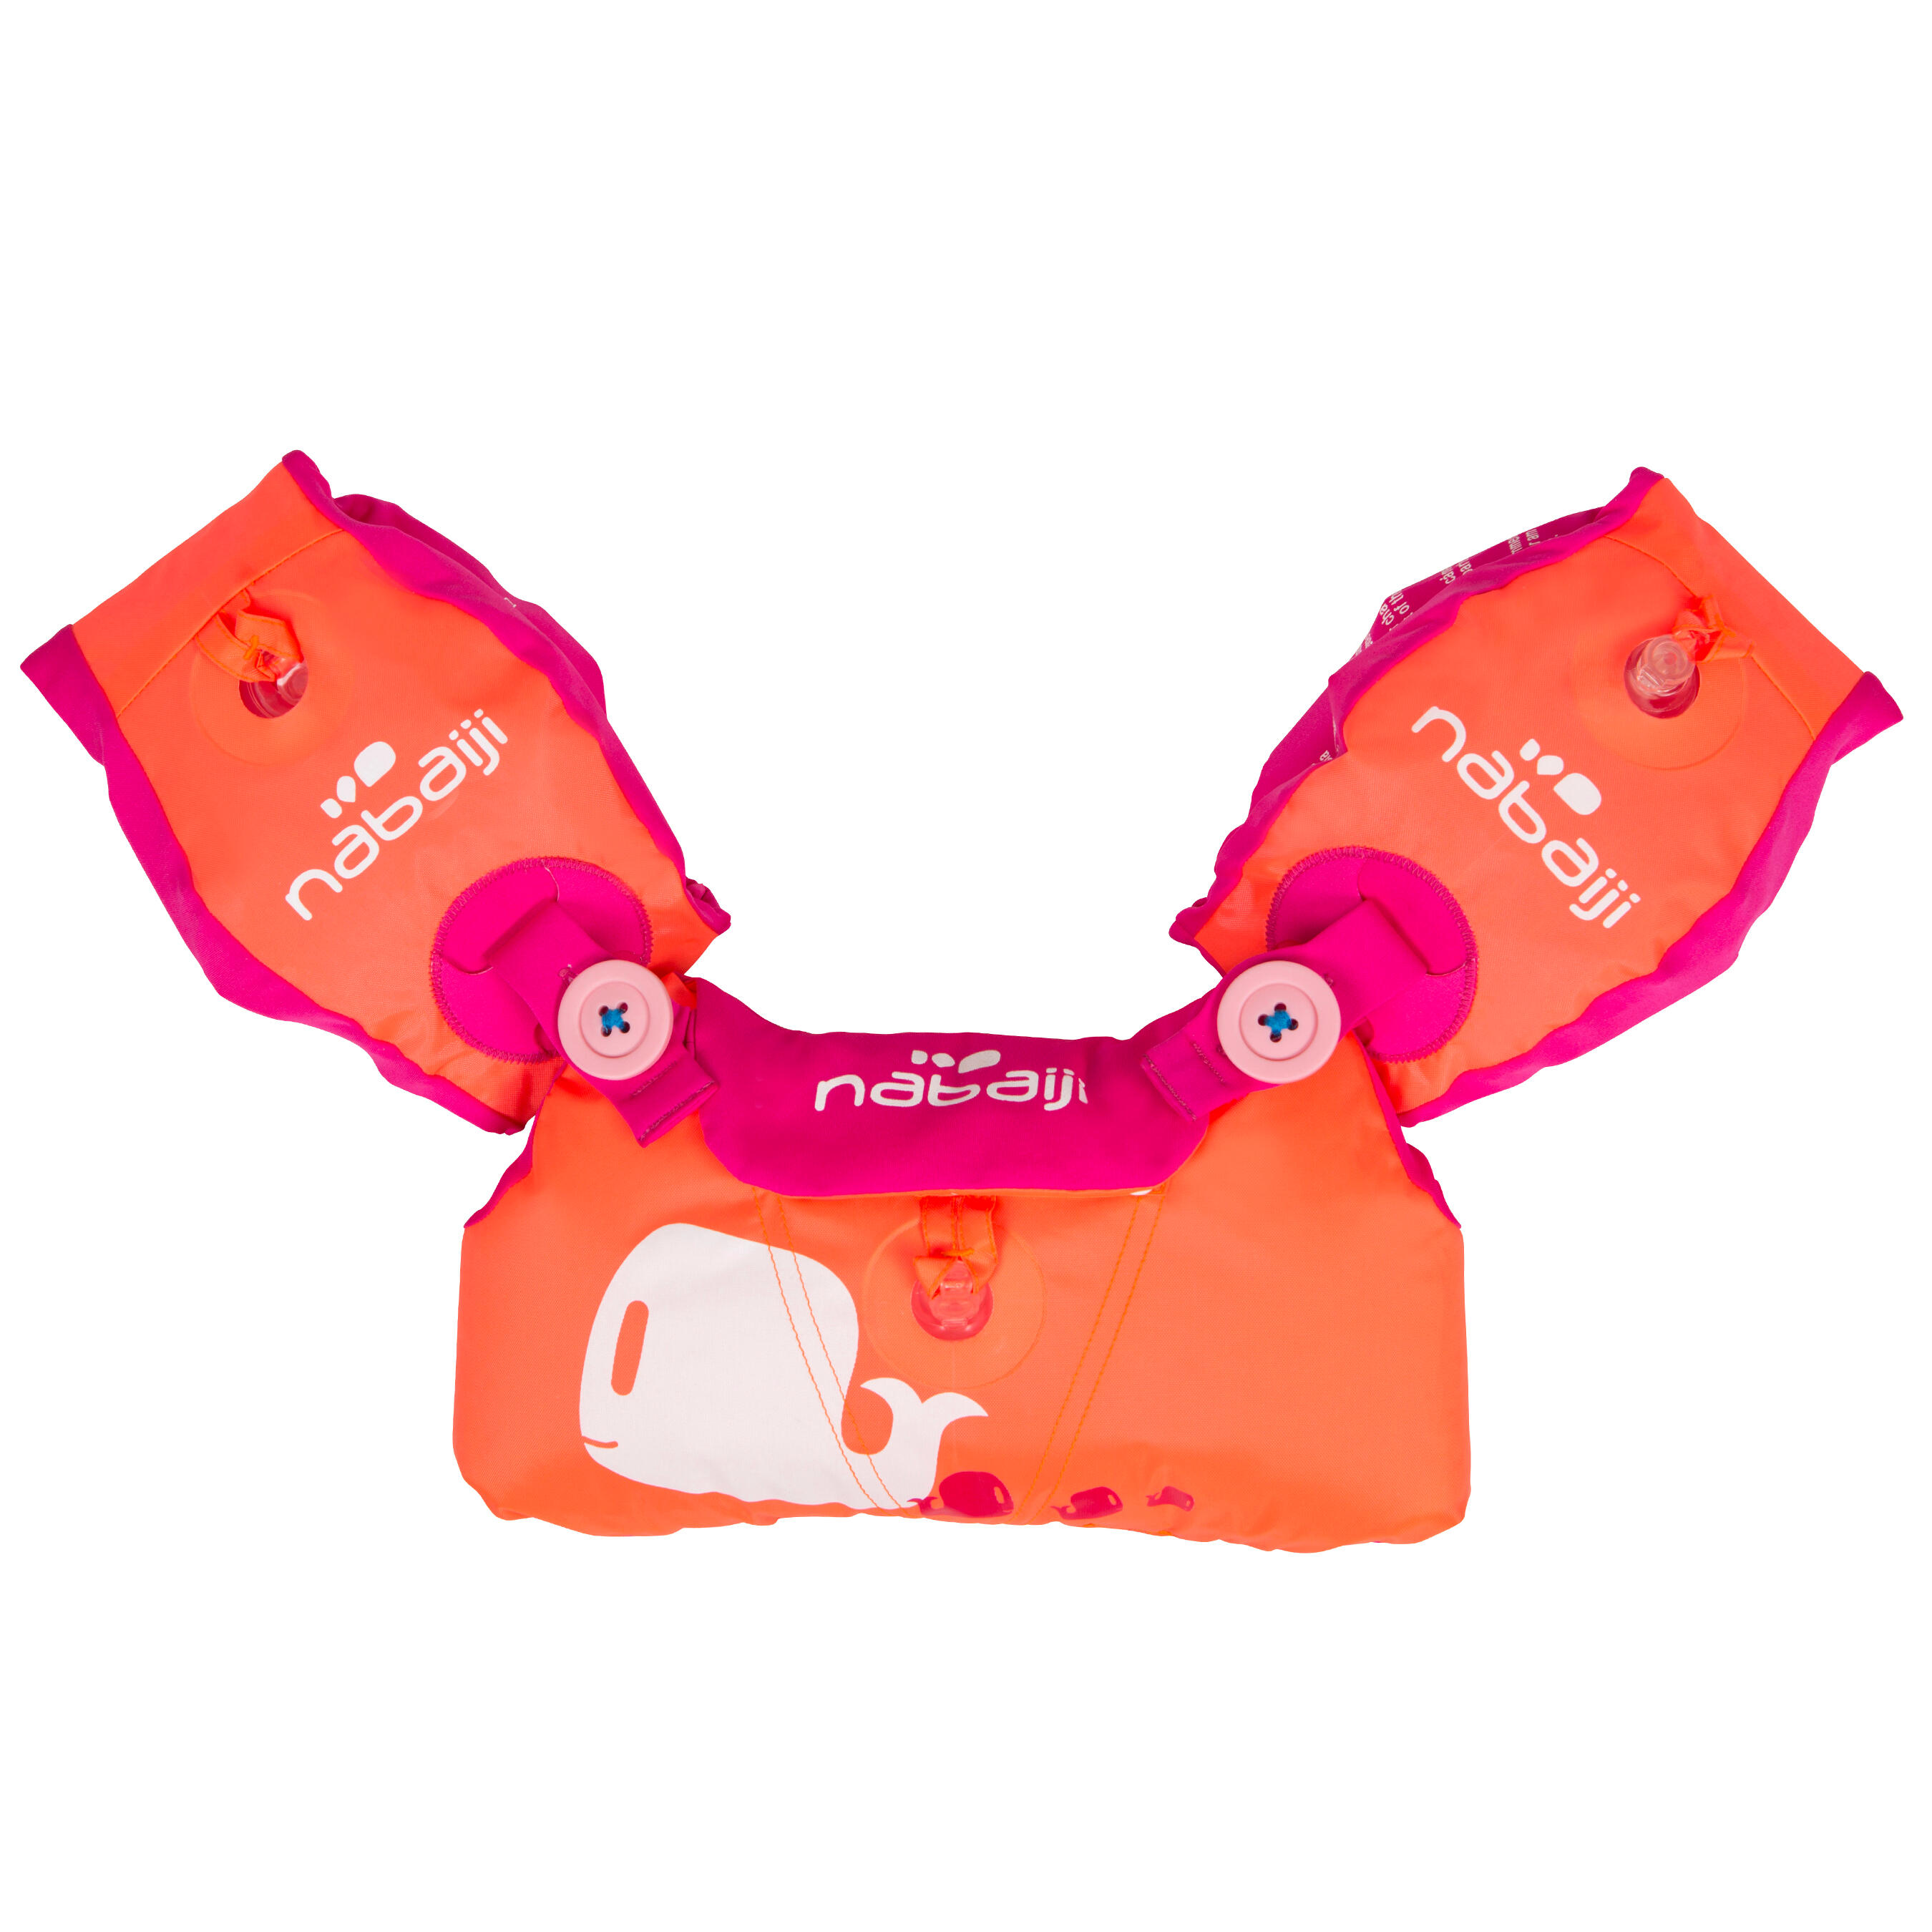 NABAIJI Tiswim progressive 15-30 kg armband-belt - orange and pink whale design